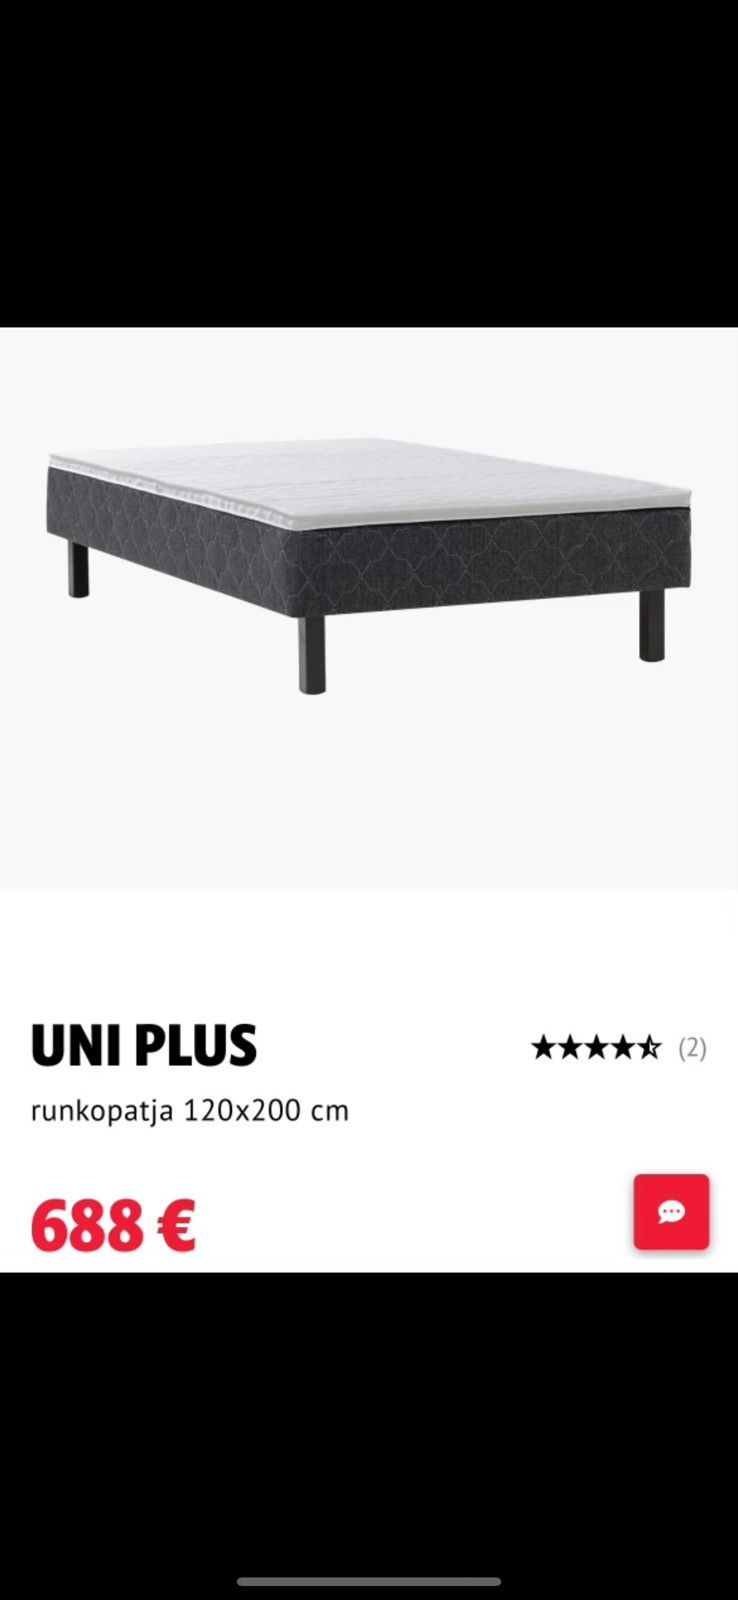 Uni Plus sänky + patja 120 x 200